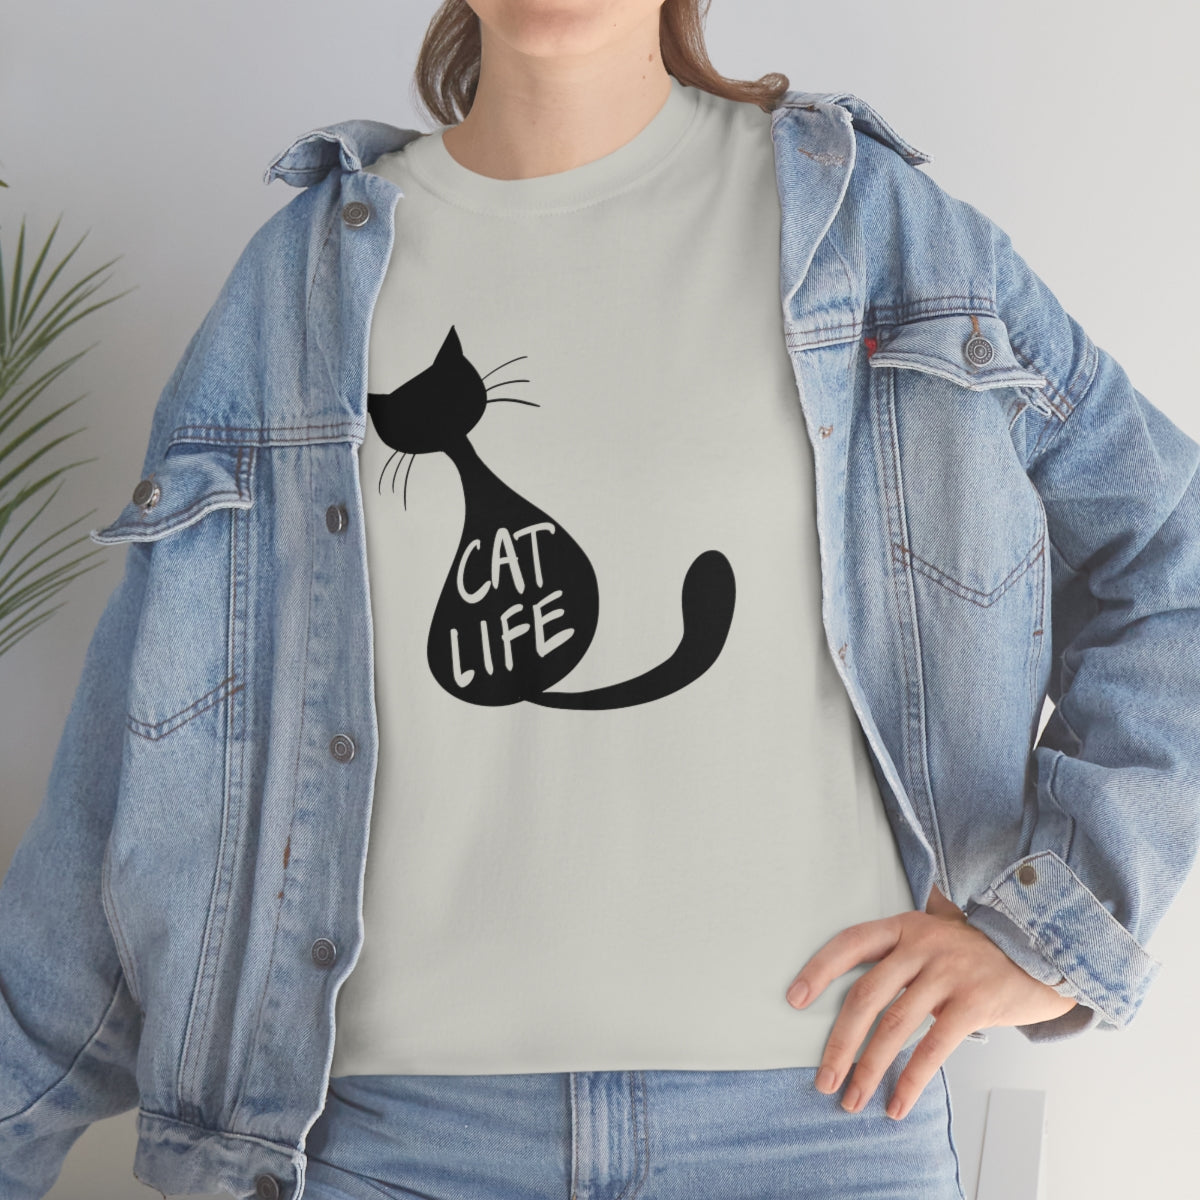 Black Cat Printed T-Shirt, Unisex Heavy Cotton Tee